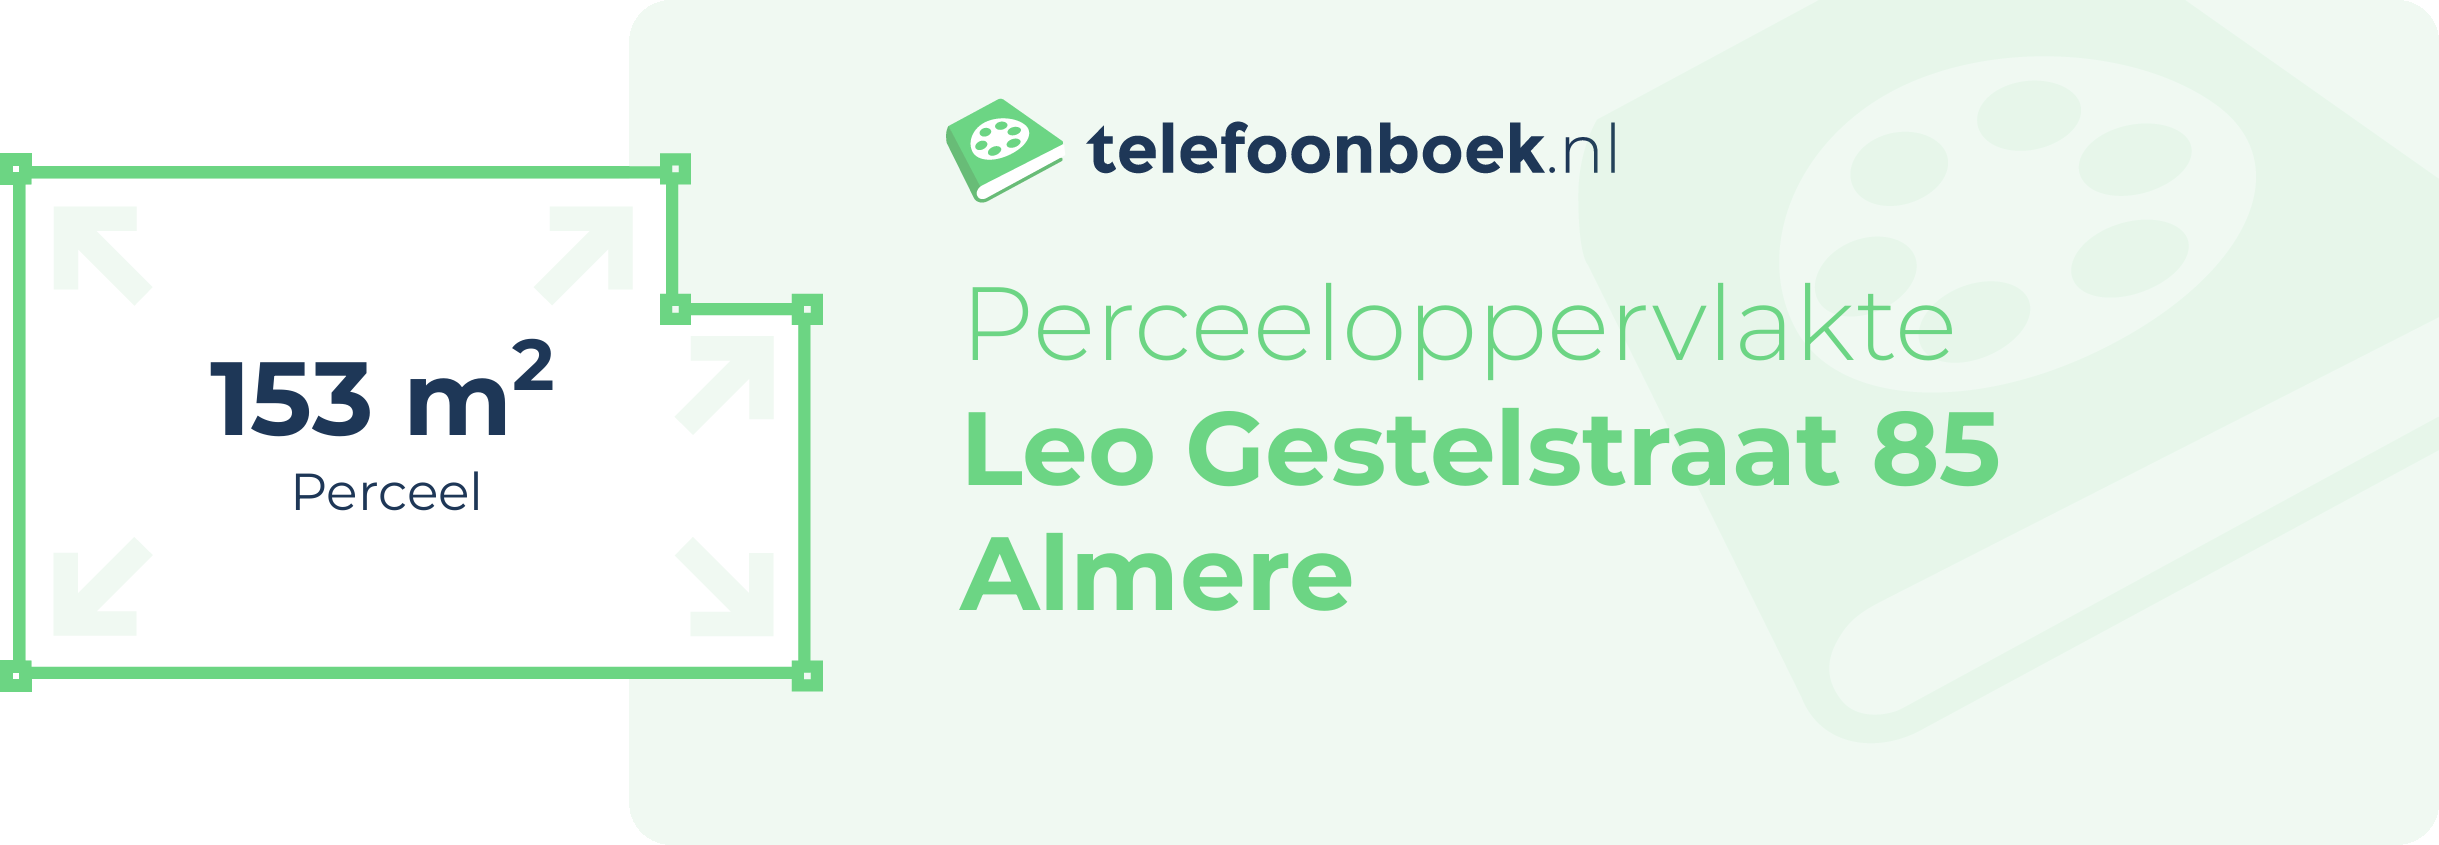 Perceeloppervlakte Leo Gestelstraat 85 Almere